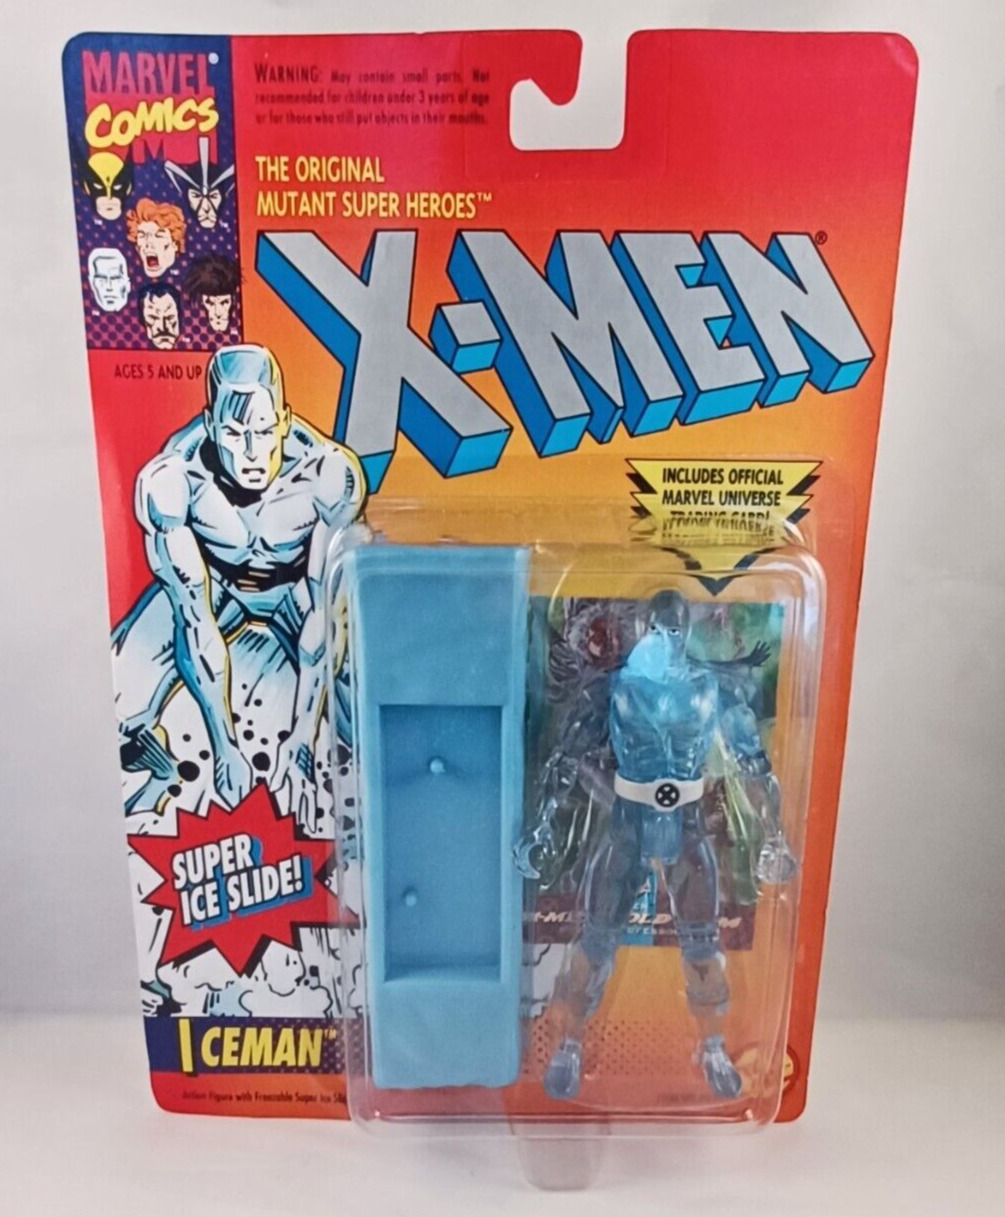 ICEMAN Super Ice Slide X-MEN Action Figure MOC w/TRADING CARD Marvel ToyBiz 1993